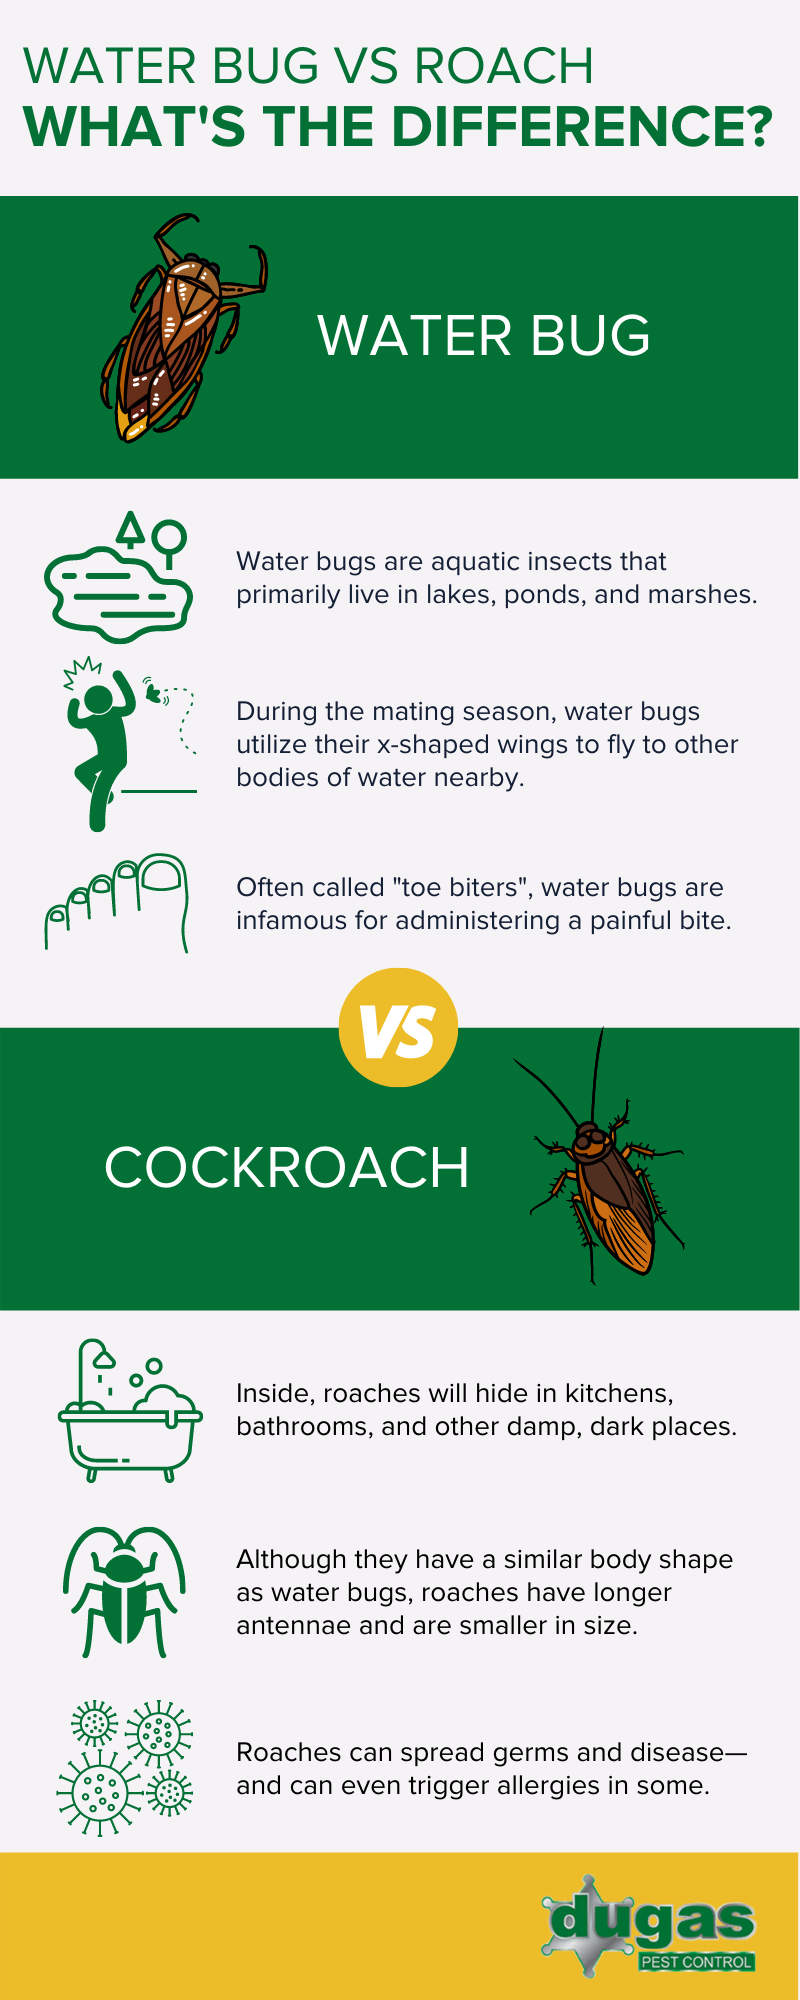 Water bug vs roach infographic in Baton Rouge LA - Dugas Pest Control